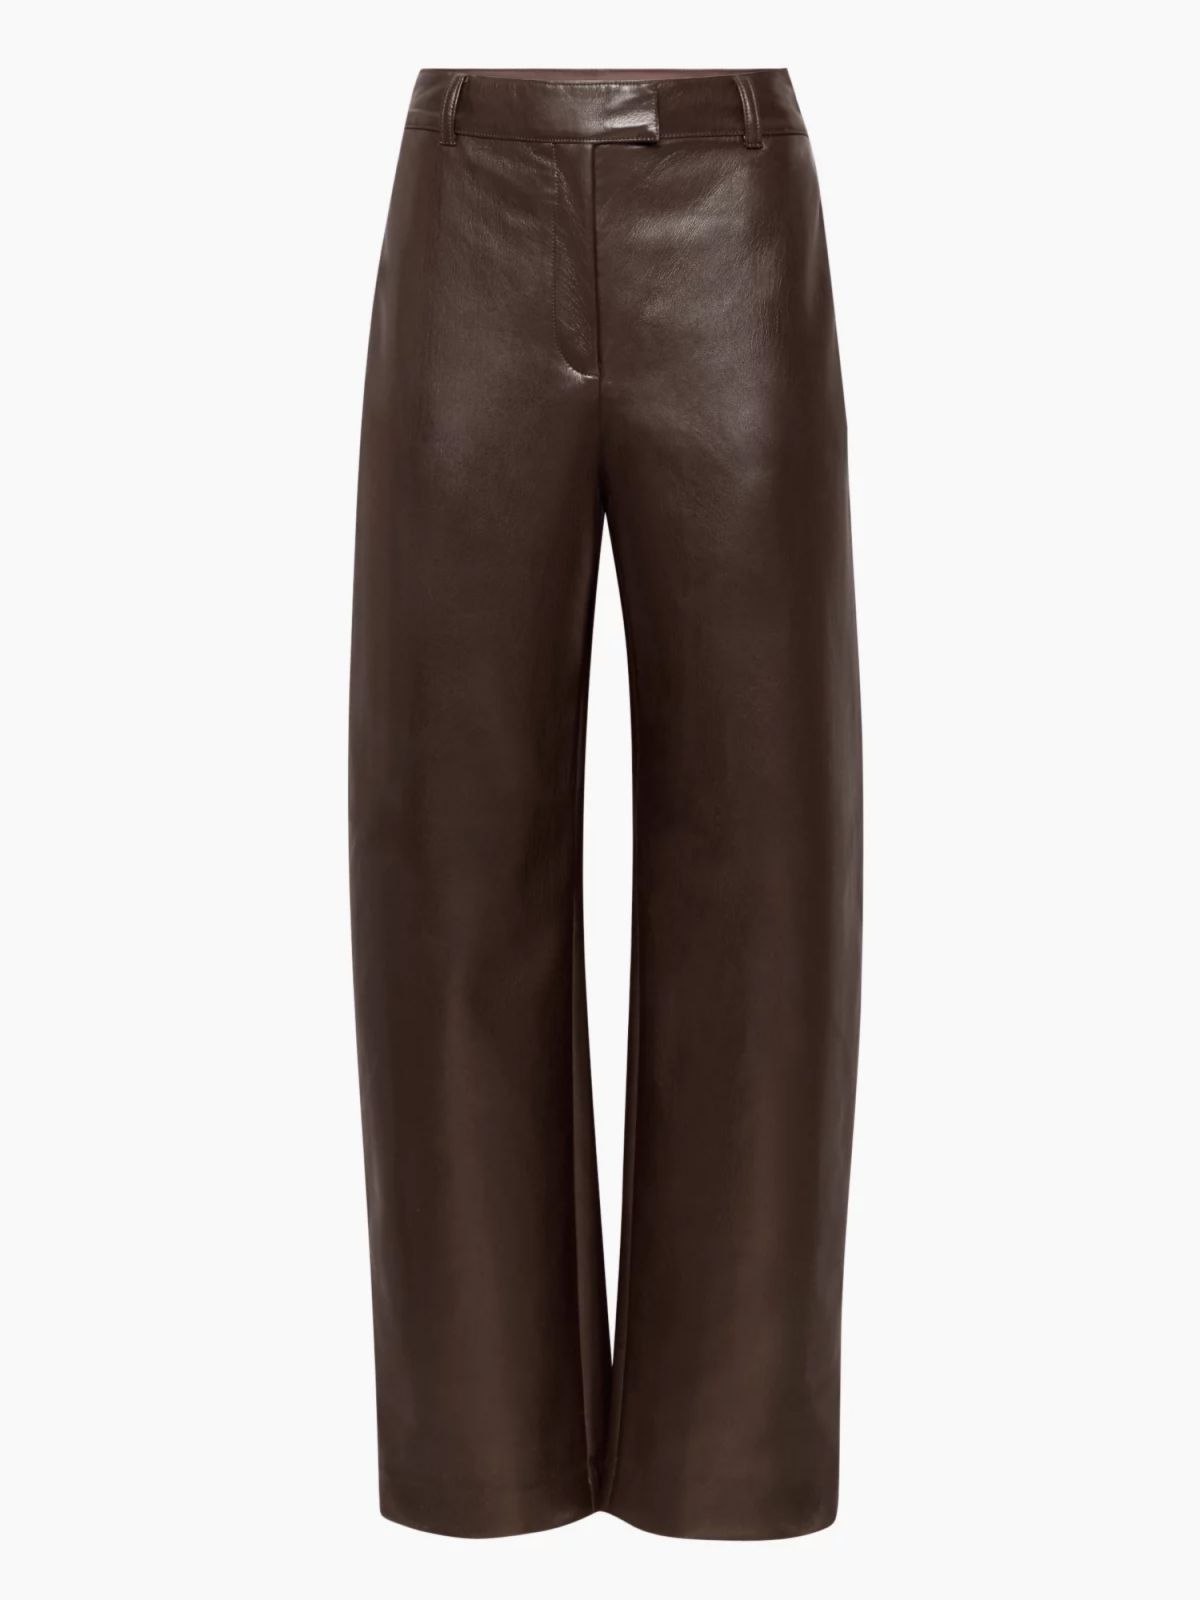 Ada Vegan Leather Trouser - Adorn Boutique